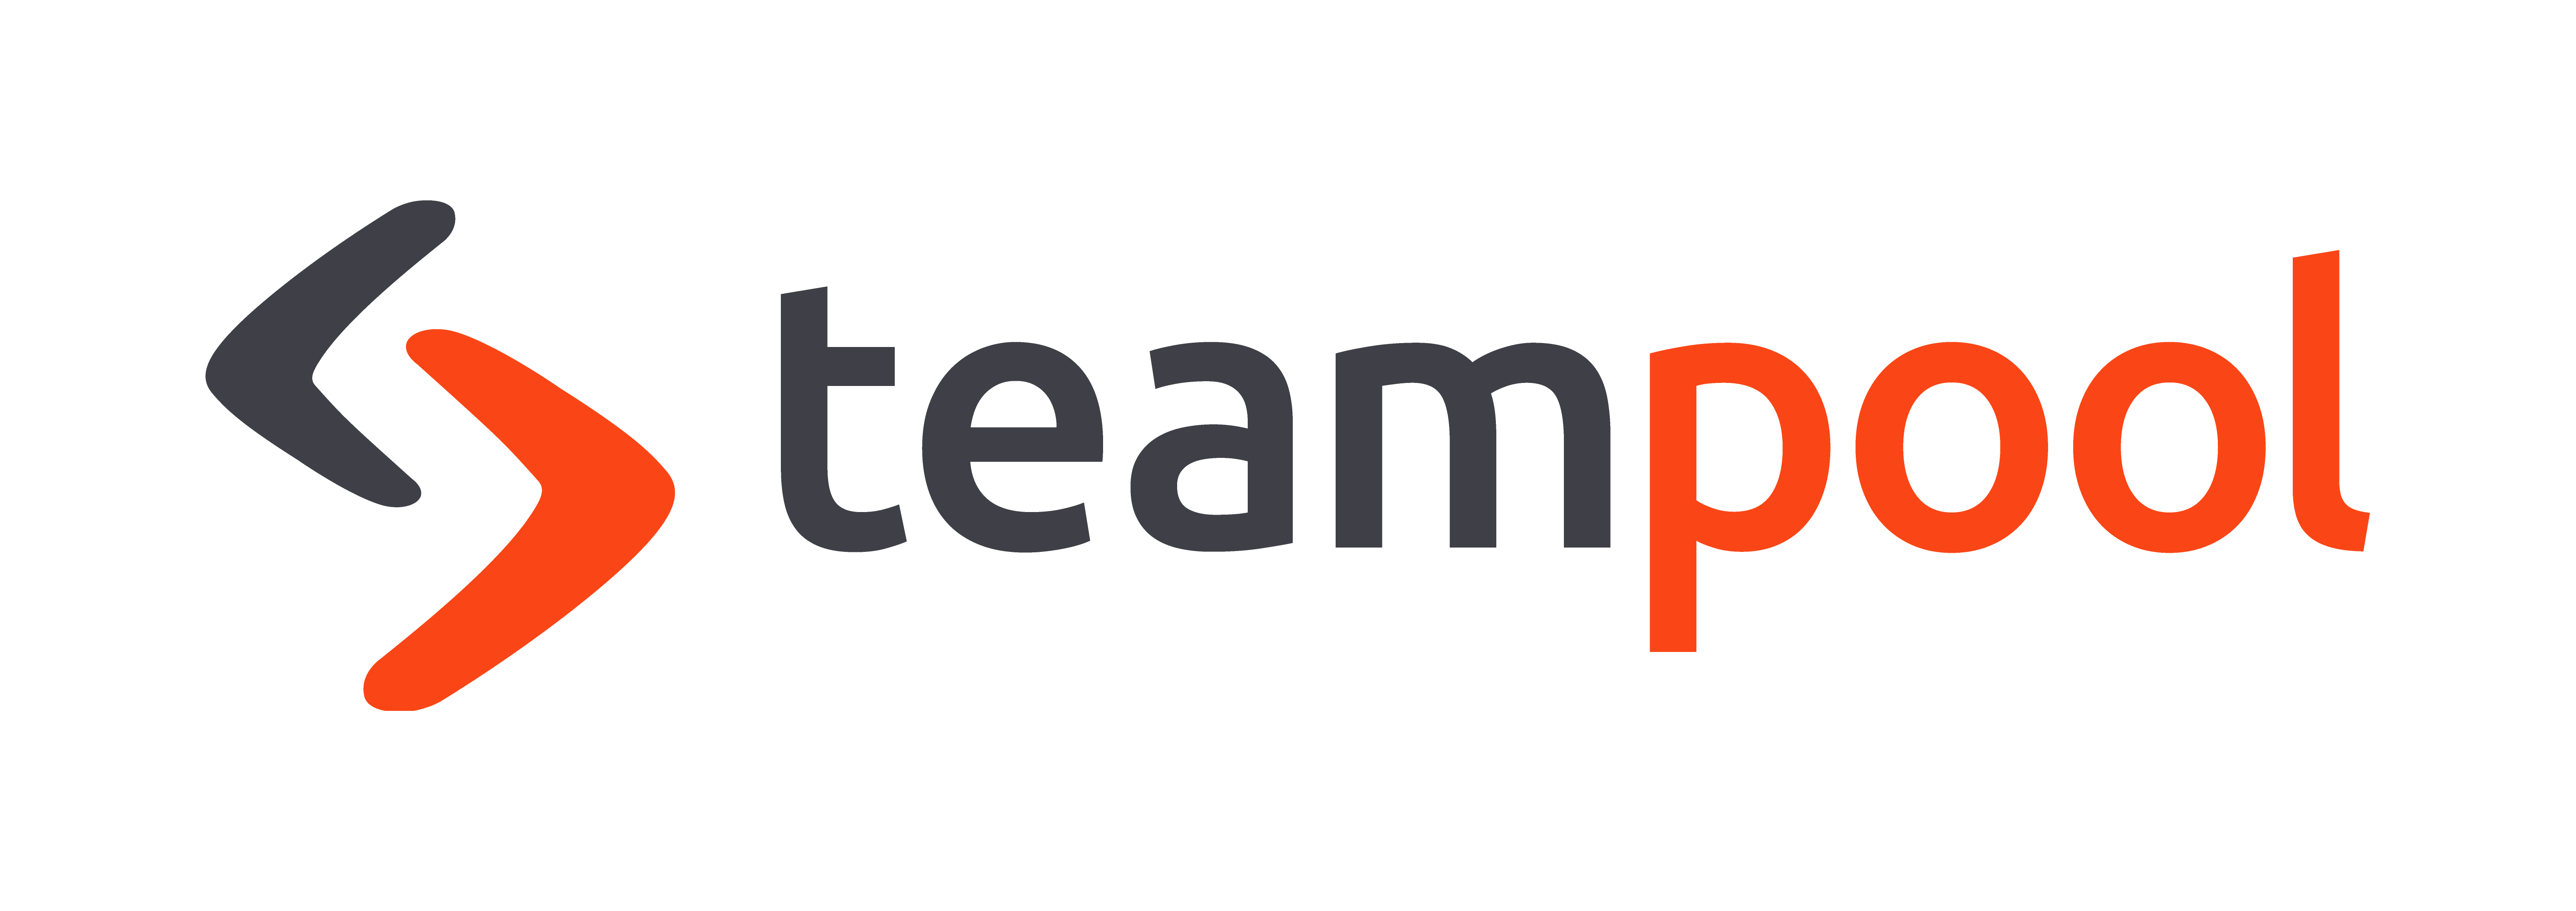 Logo teampool